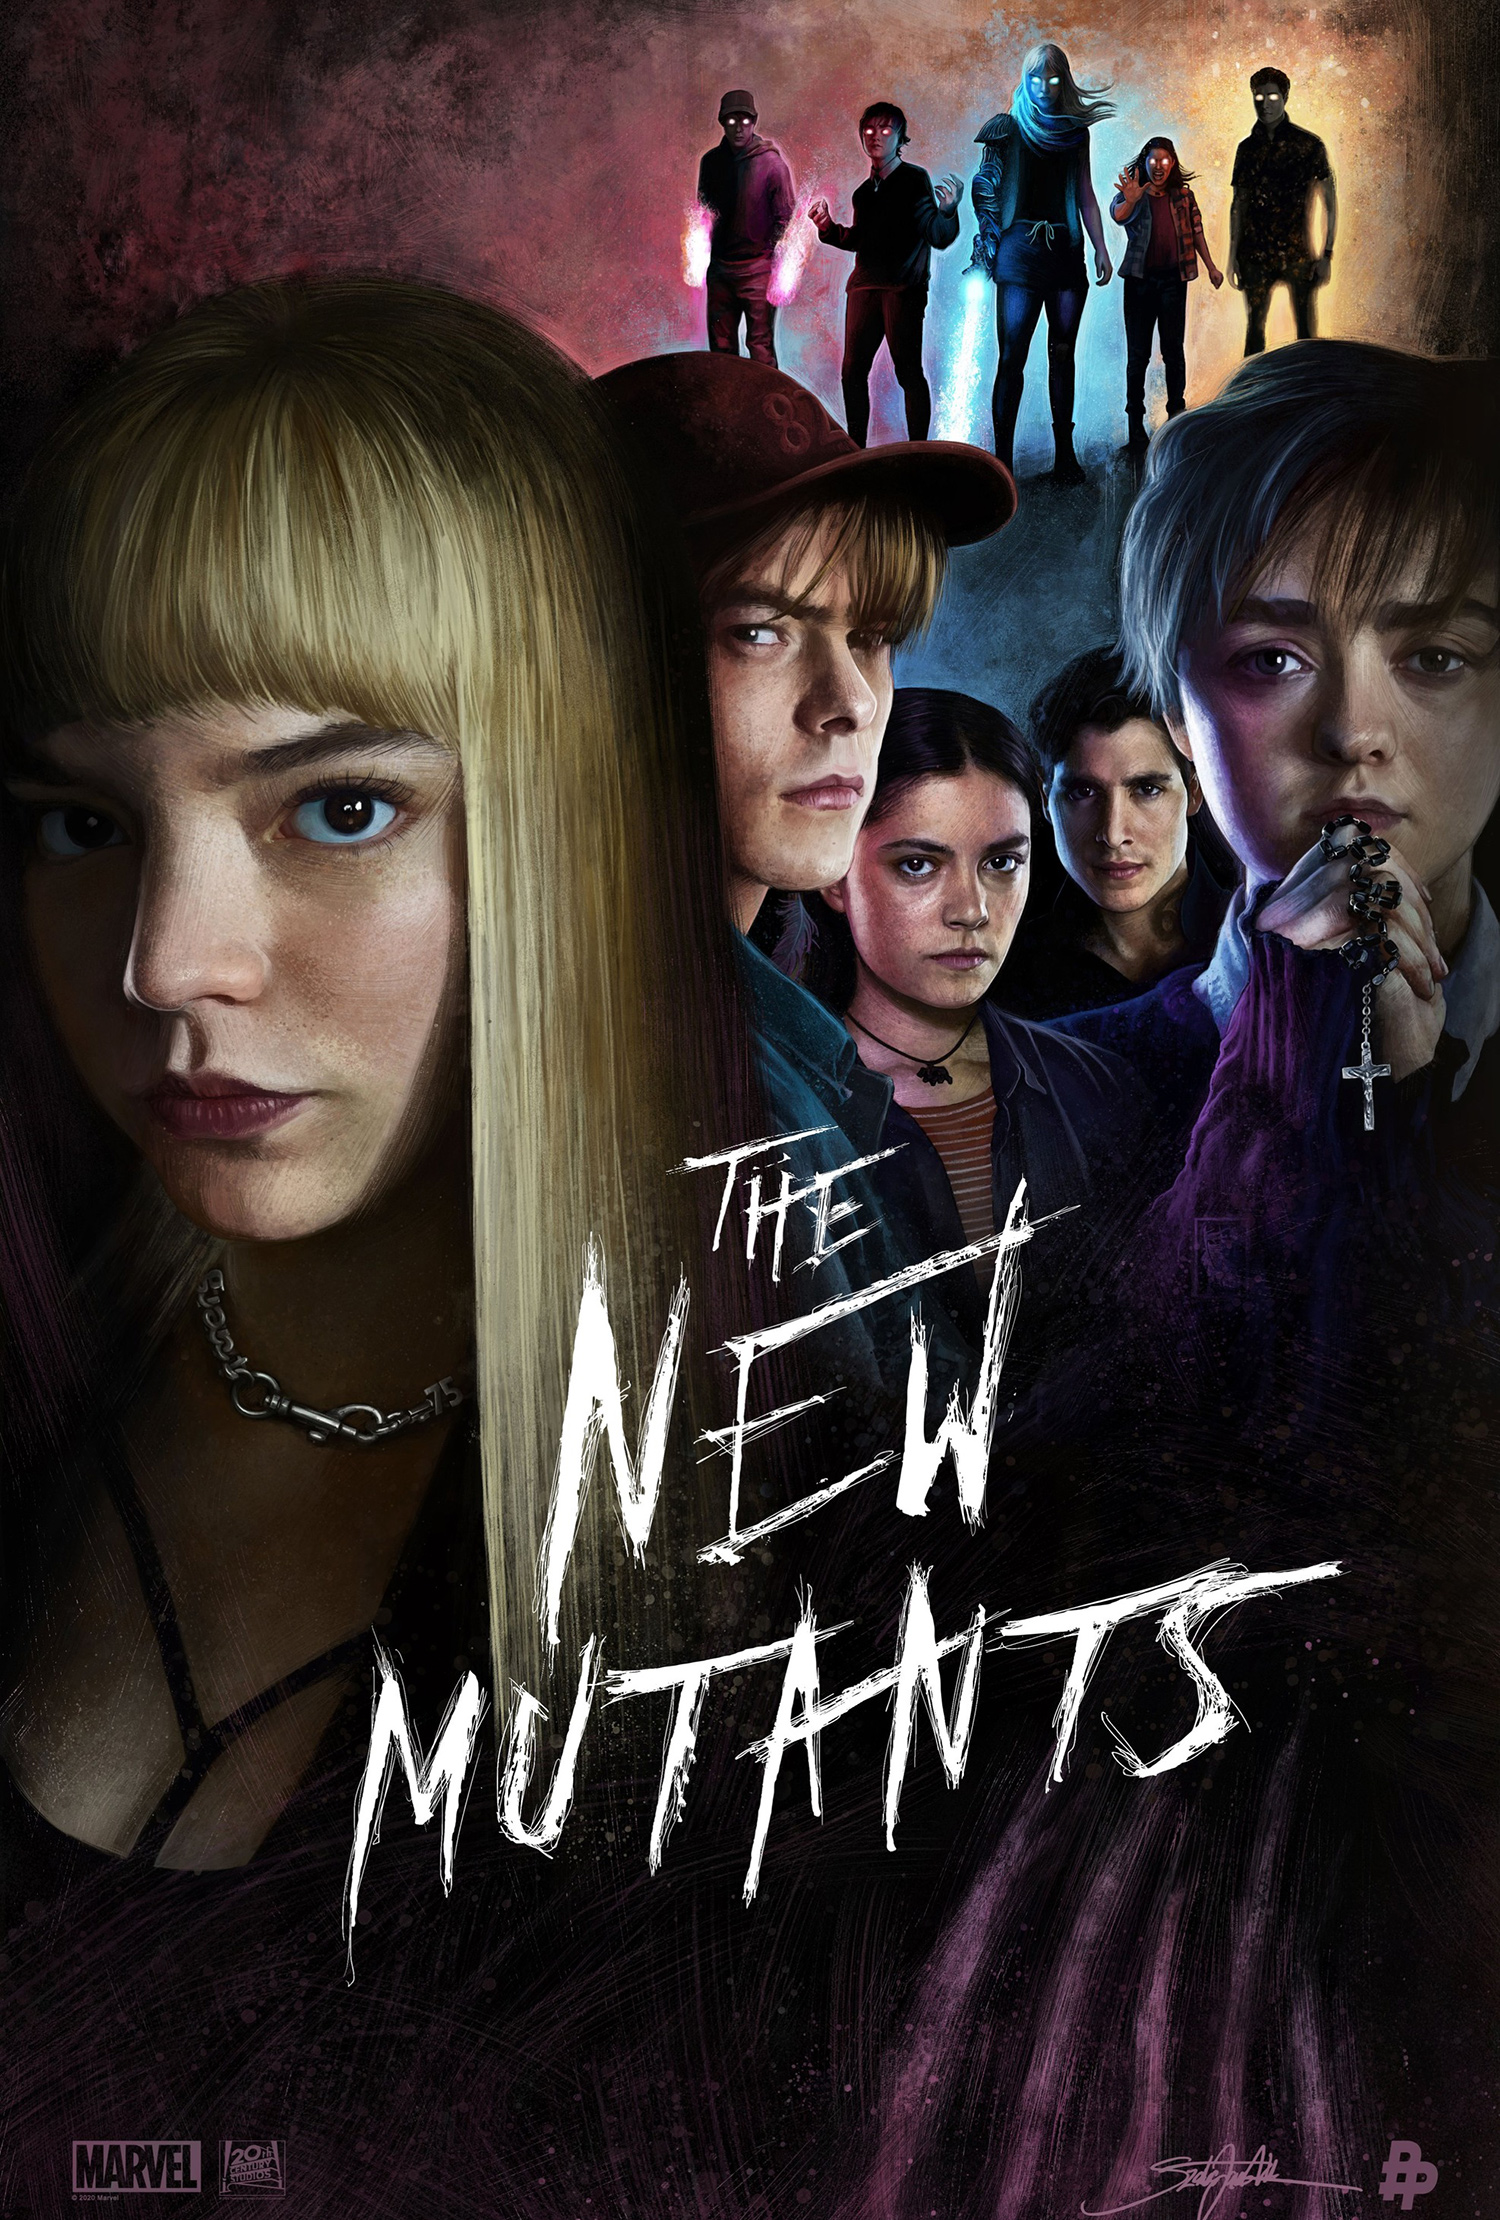 The New Mutants (2020)